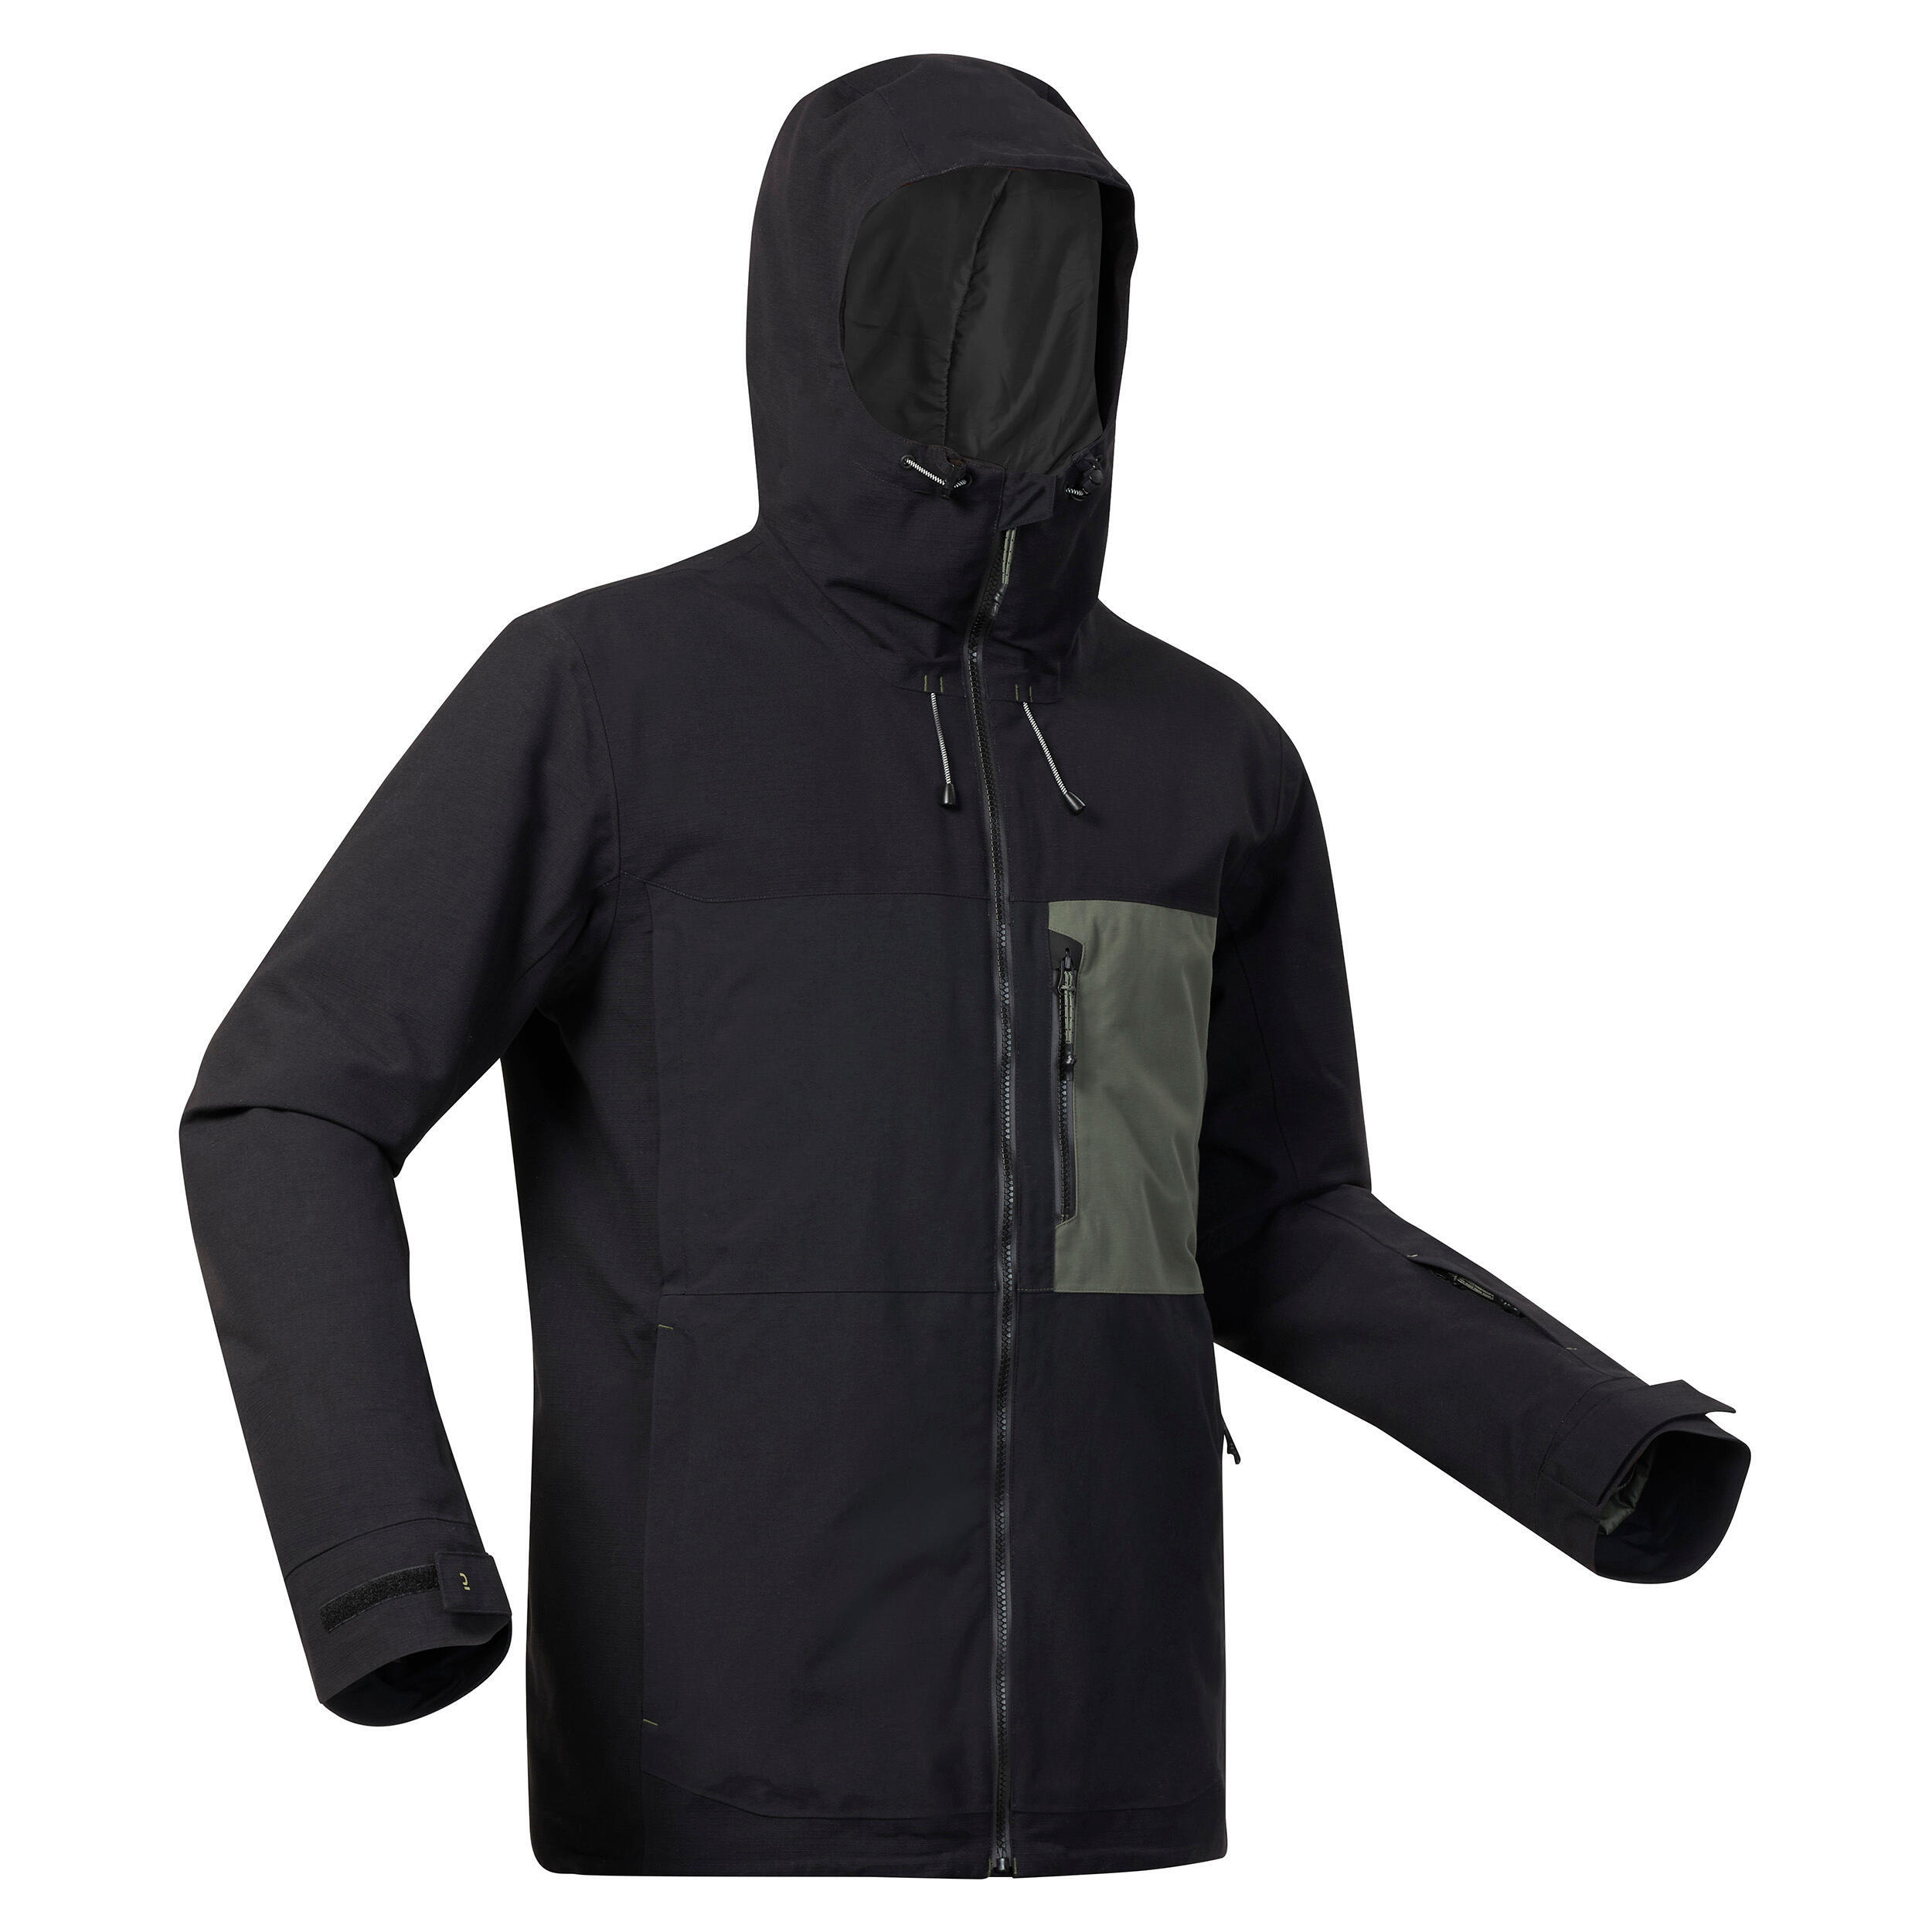 Refurbished Mens snowboard jacket compatible with ziprotec - A Grade 1/7